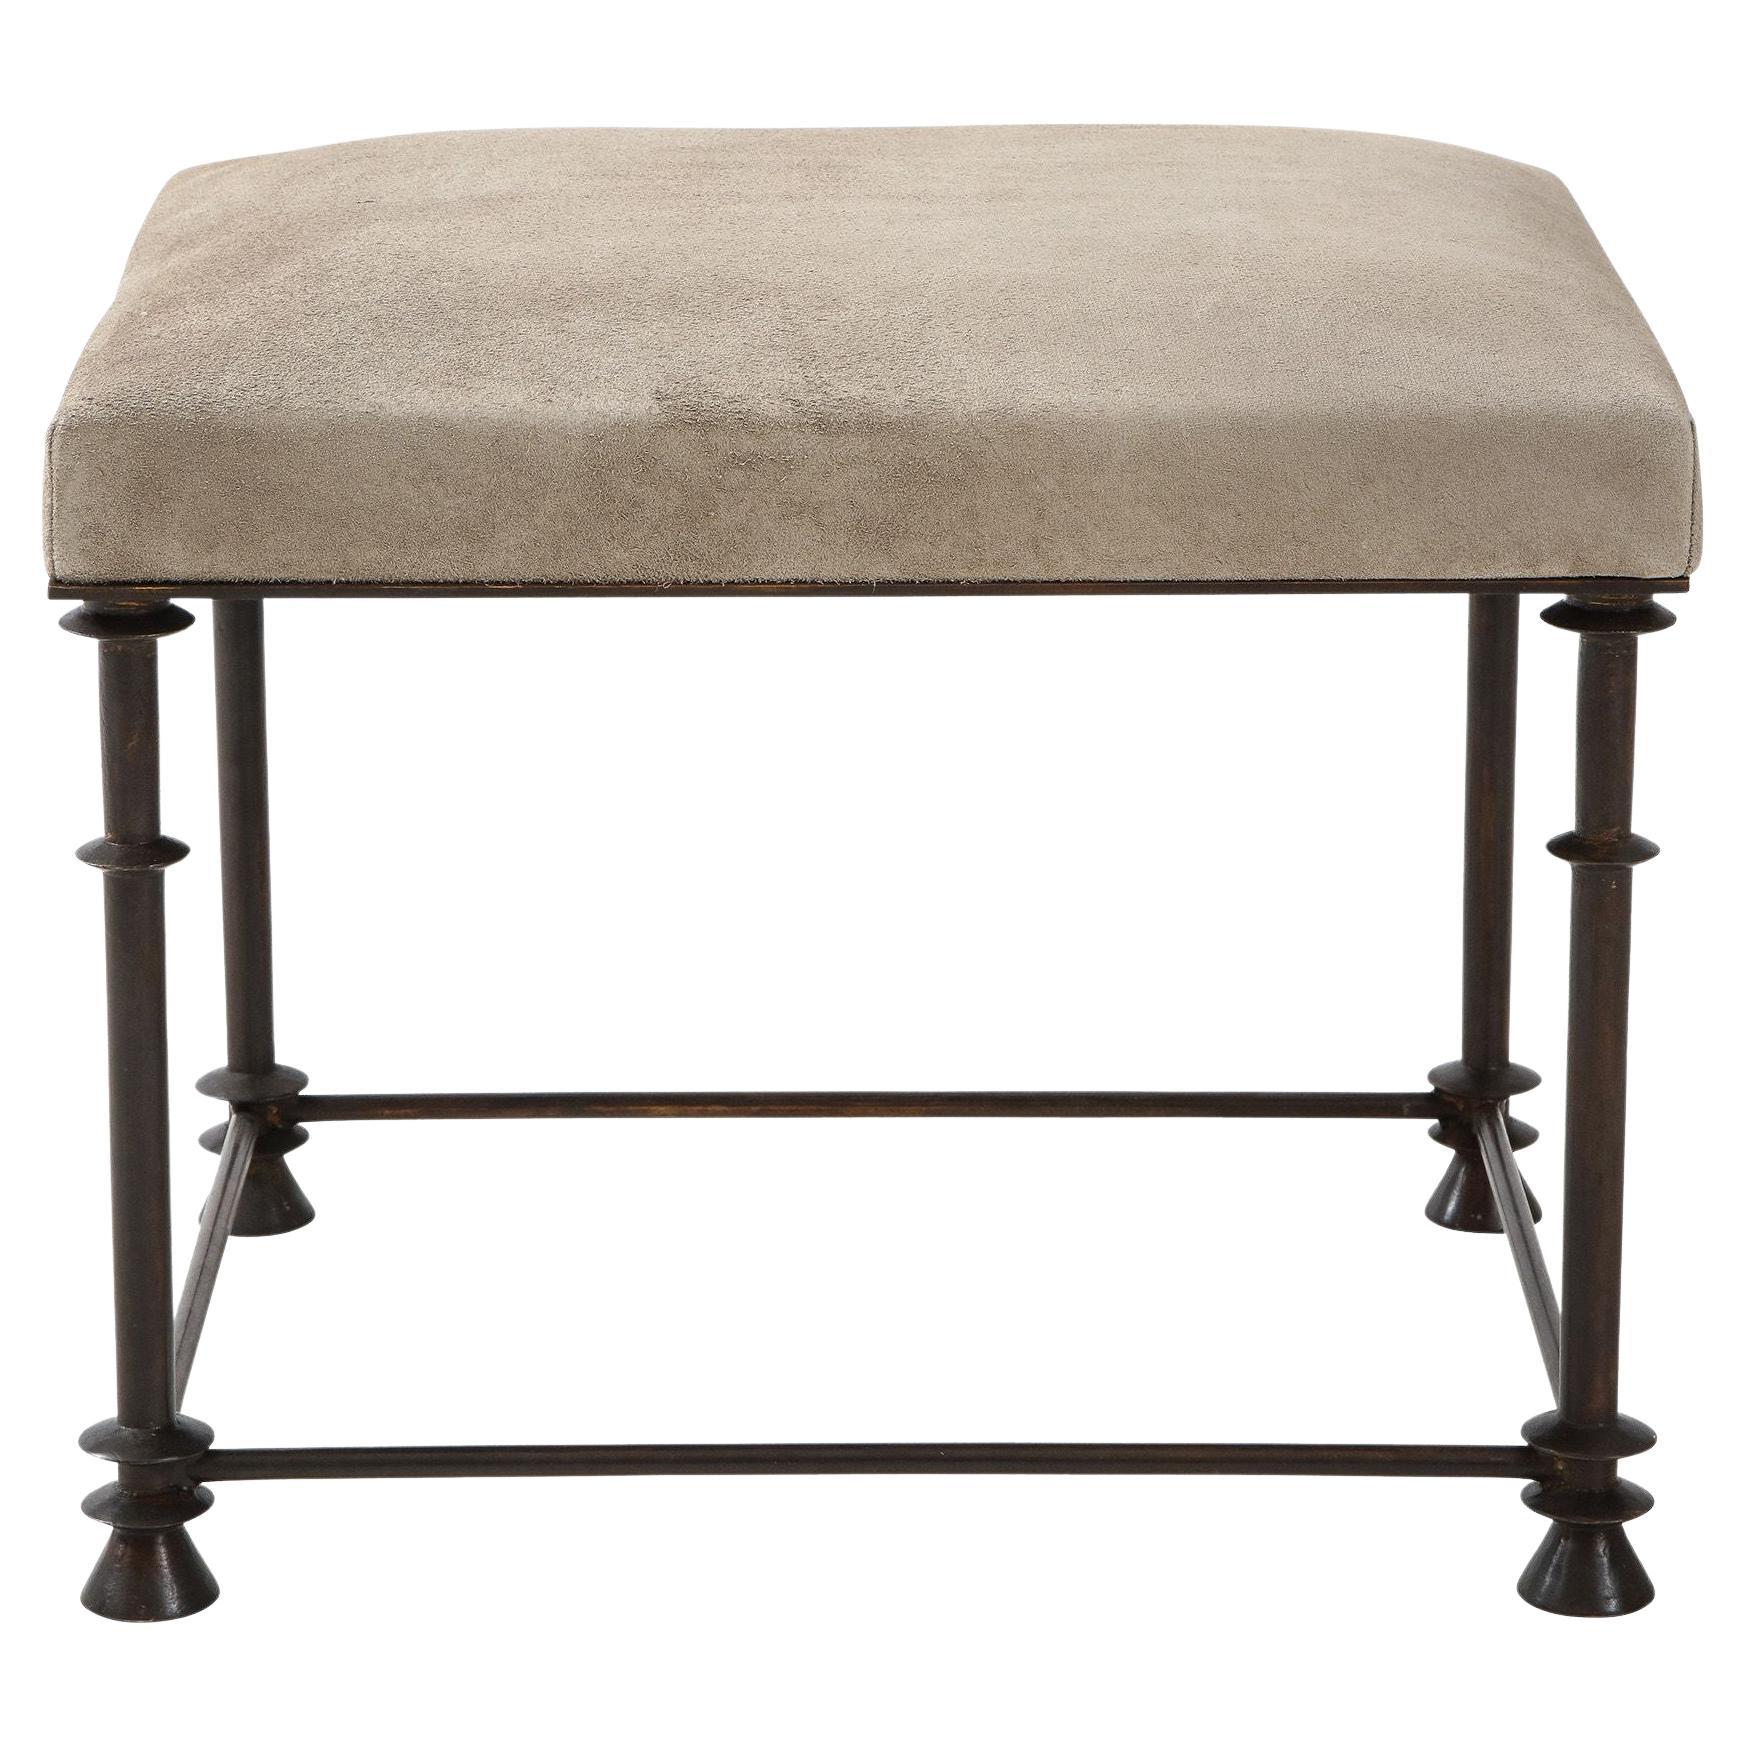 A Neoclassical style custom made bronze legged stool. Contemporary